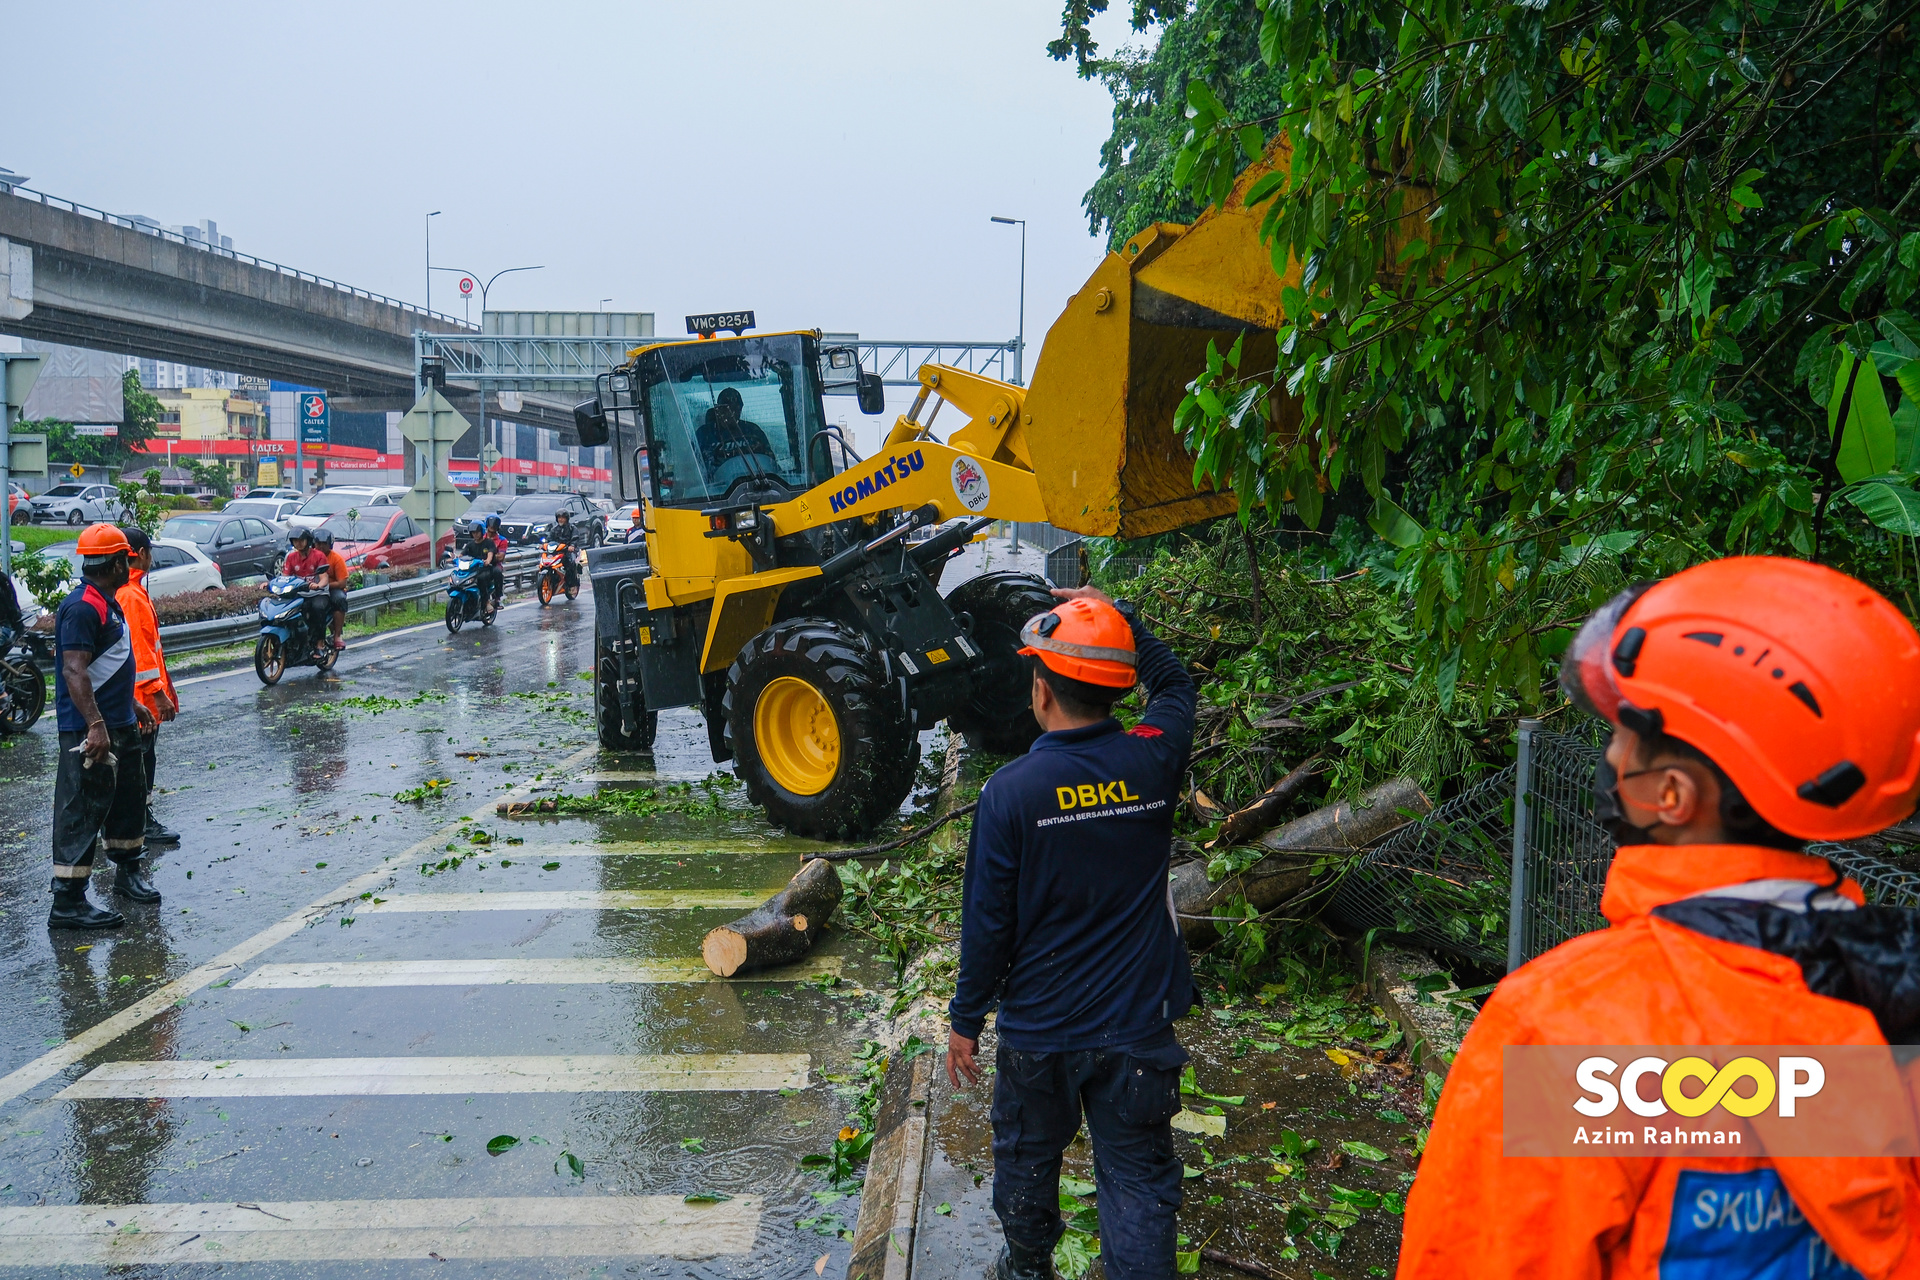 Afternoon storm chaos: fallen tree blocks traffic near Bulatan Pahang